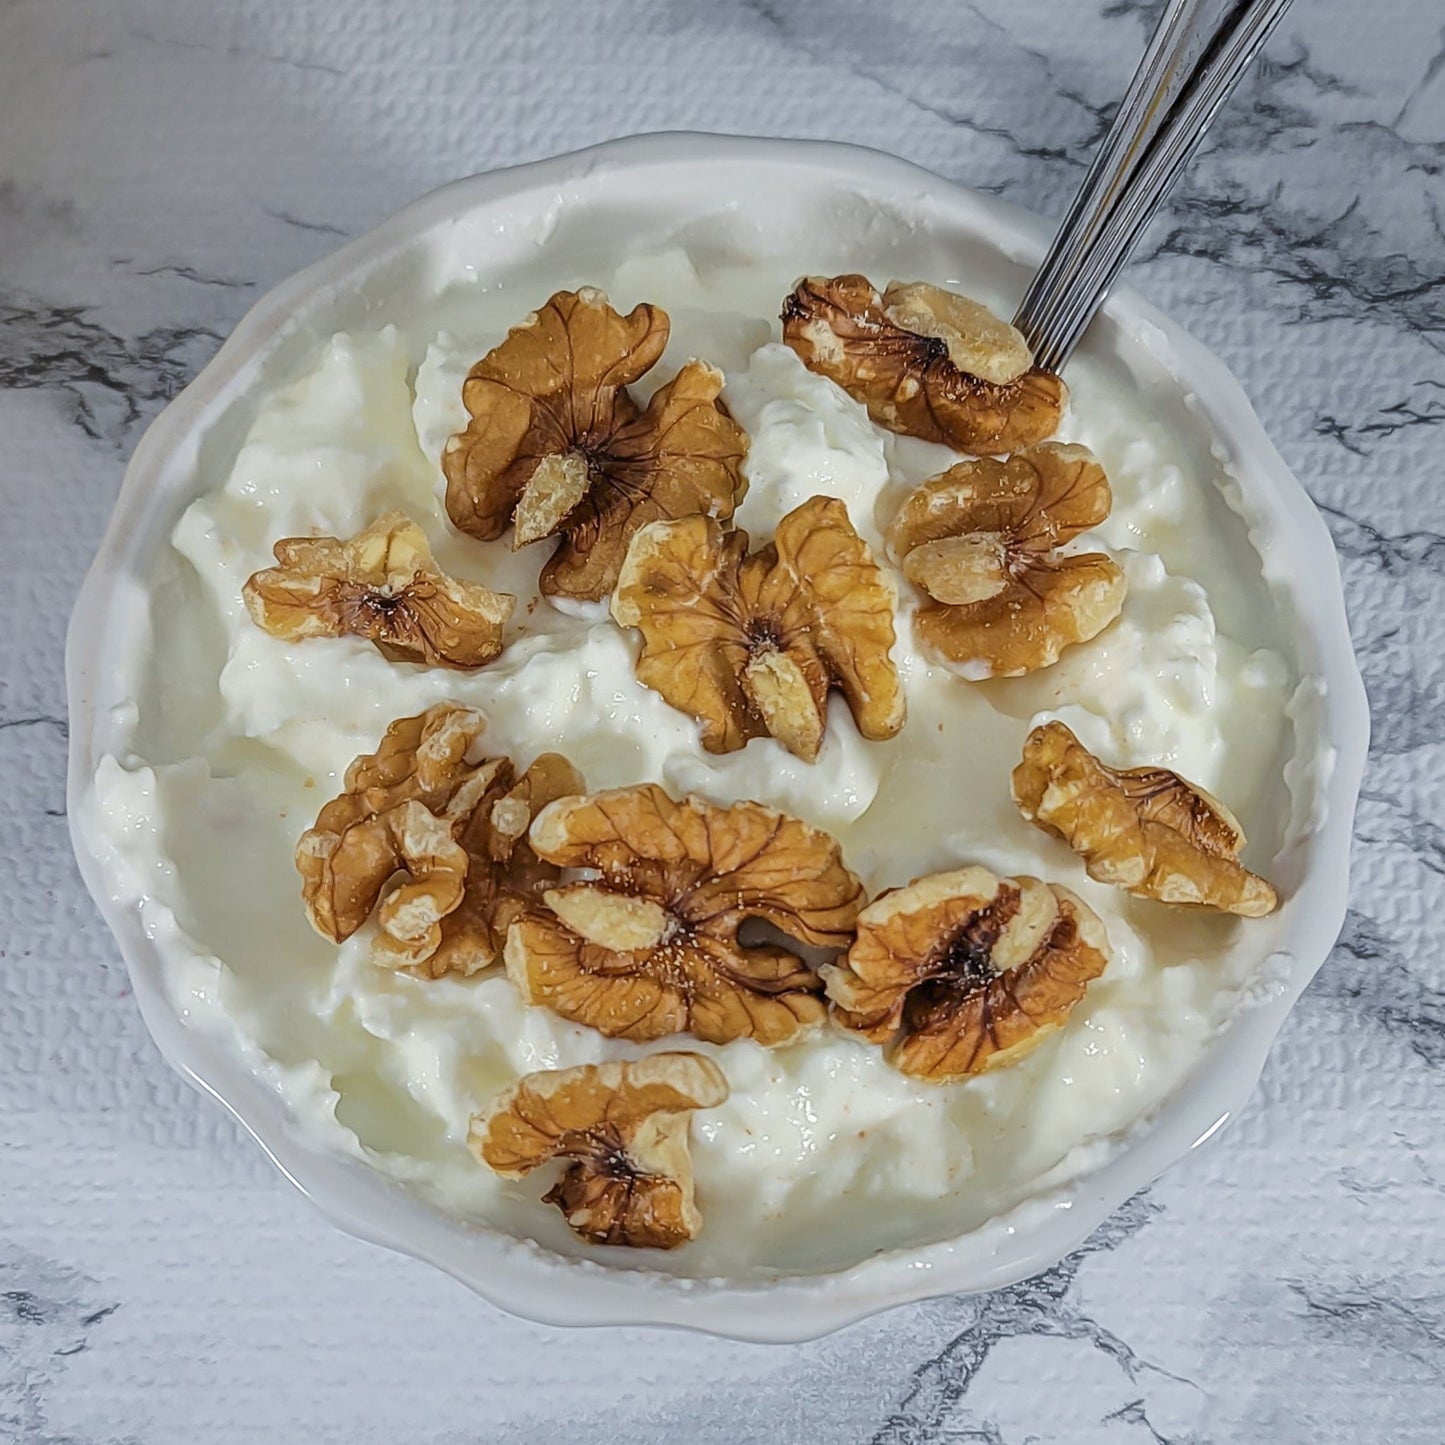 Organic Walnuts and yogurt mix